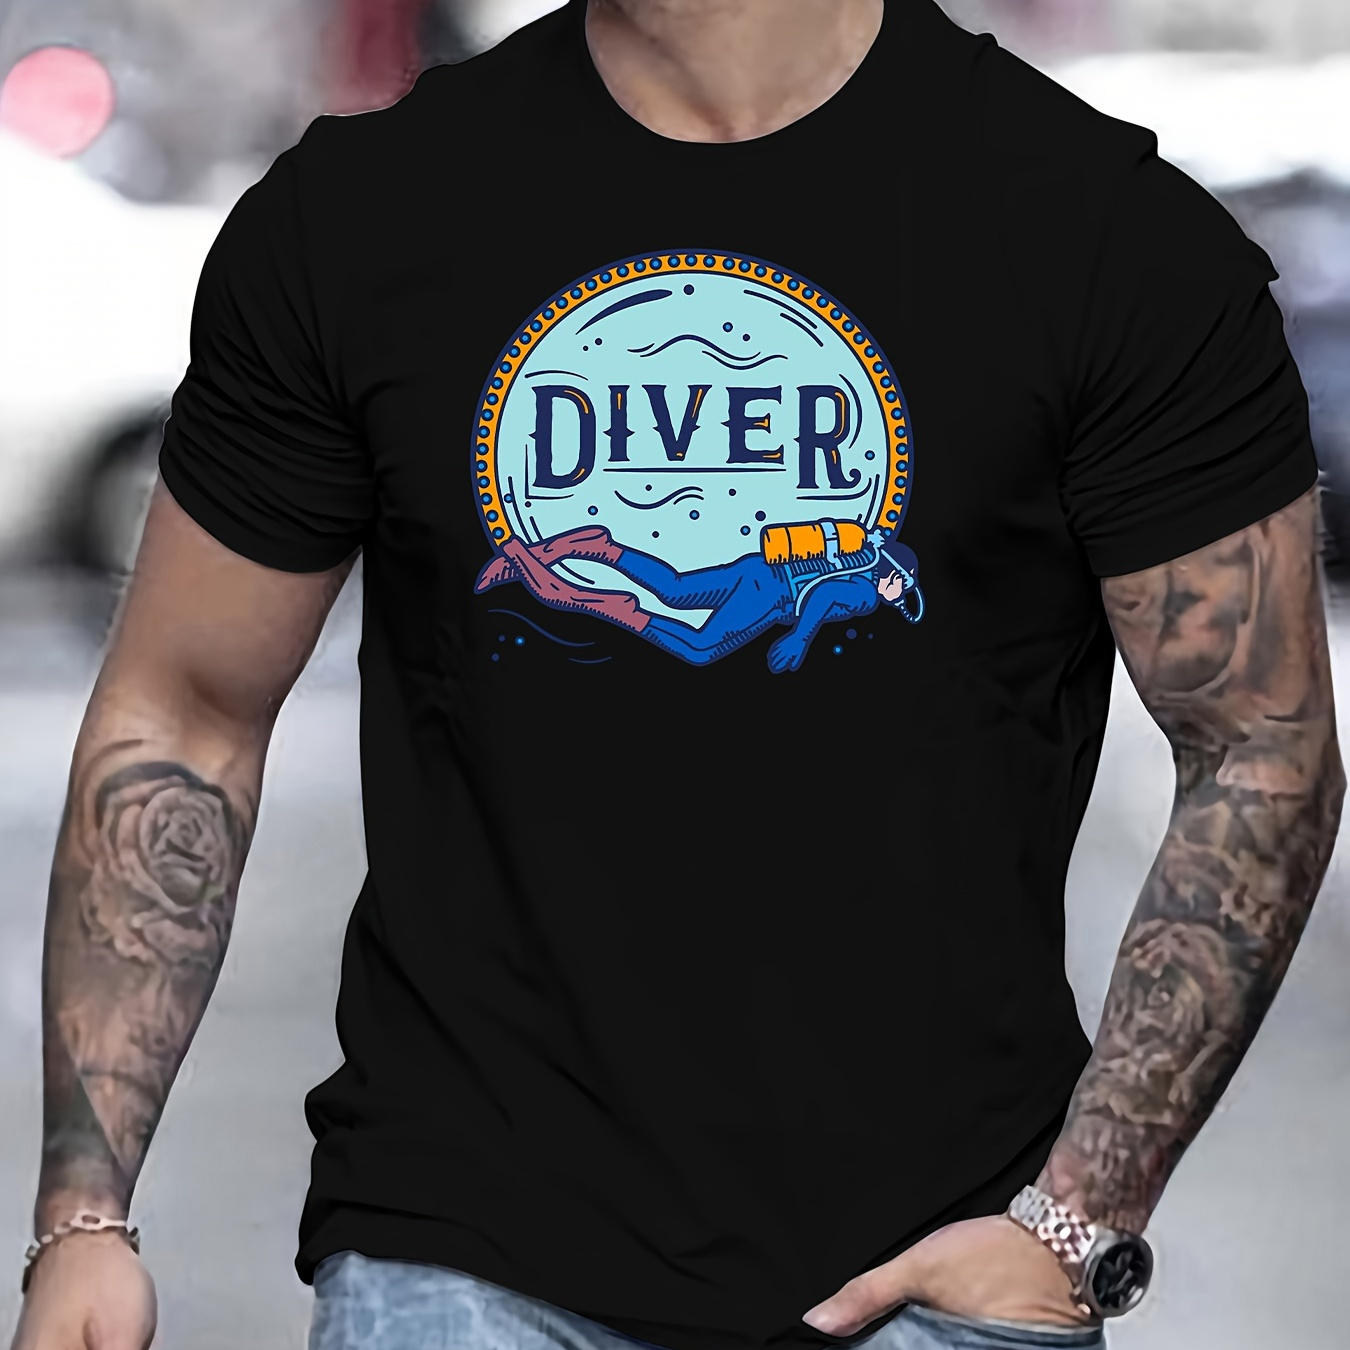 

Men's Diver Print T-shirt, Casual Short Sleeve Crew Neck Tee, Men's Clothing For Outdoor